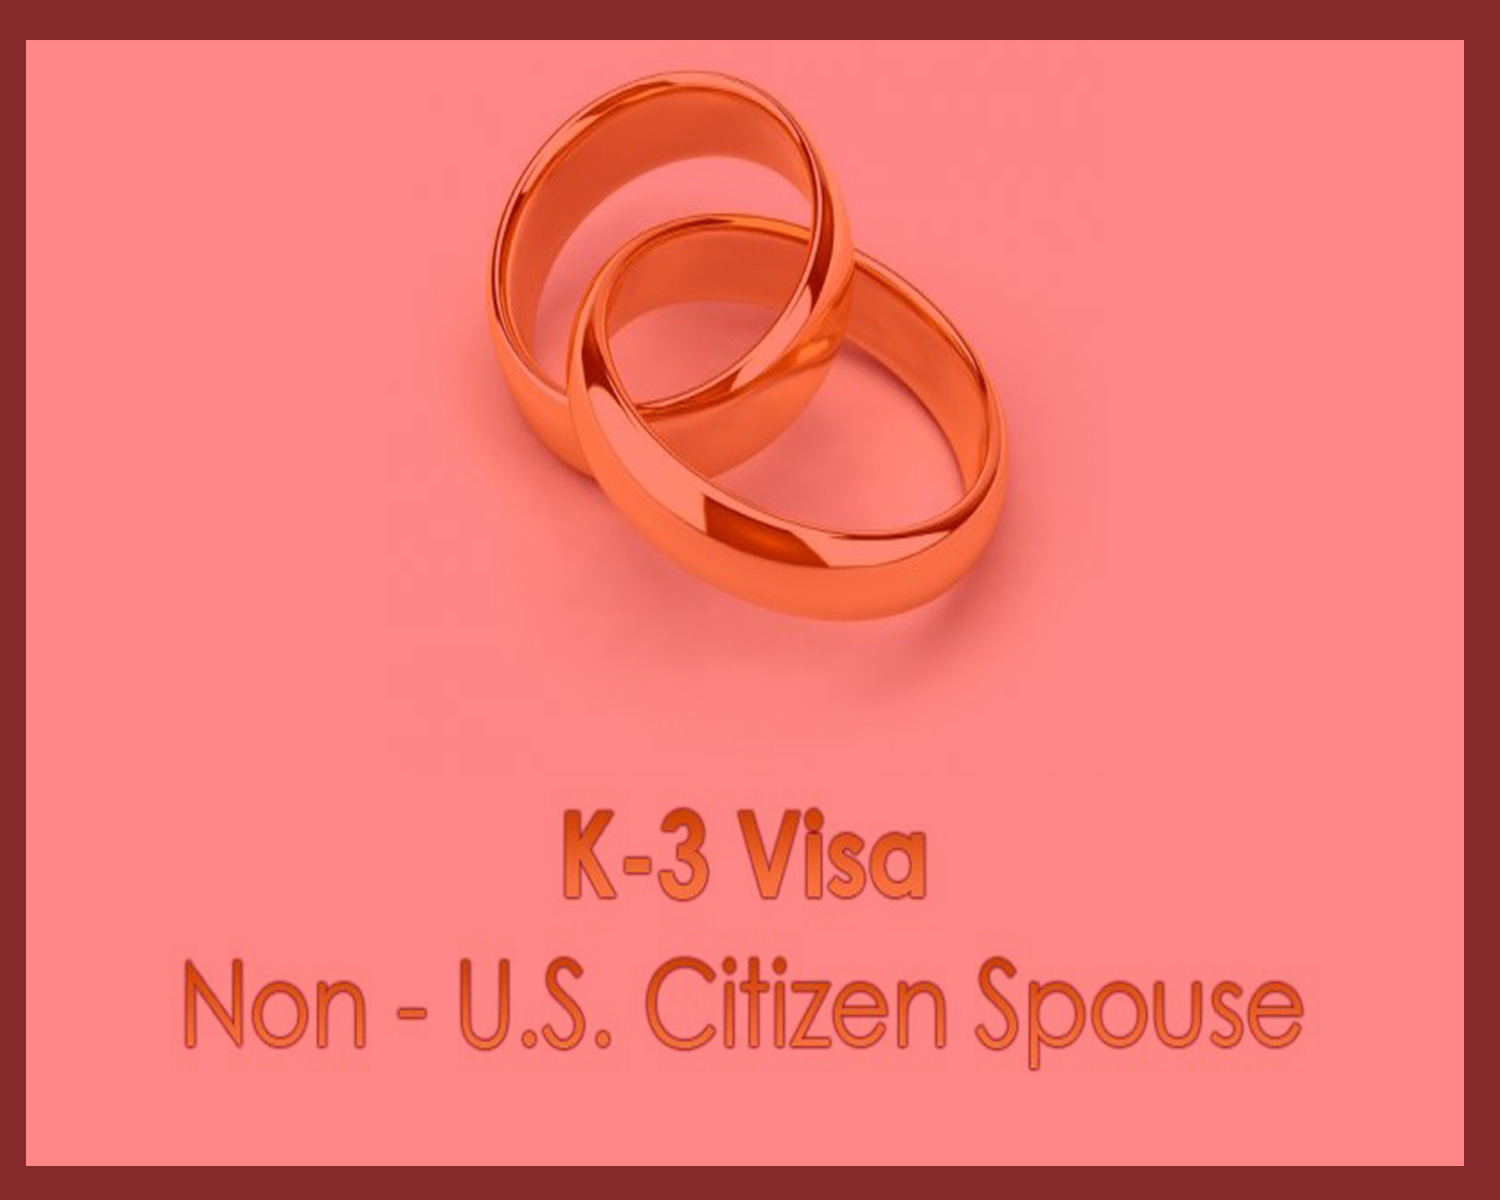 Process of Applying for a K-3 Visa